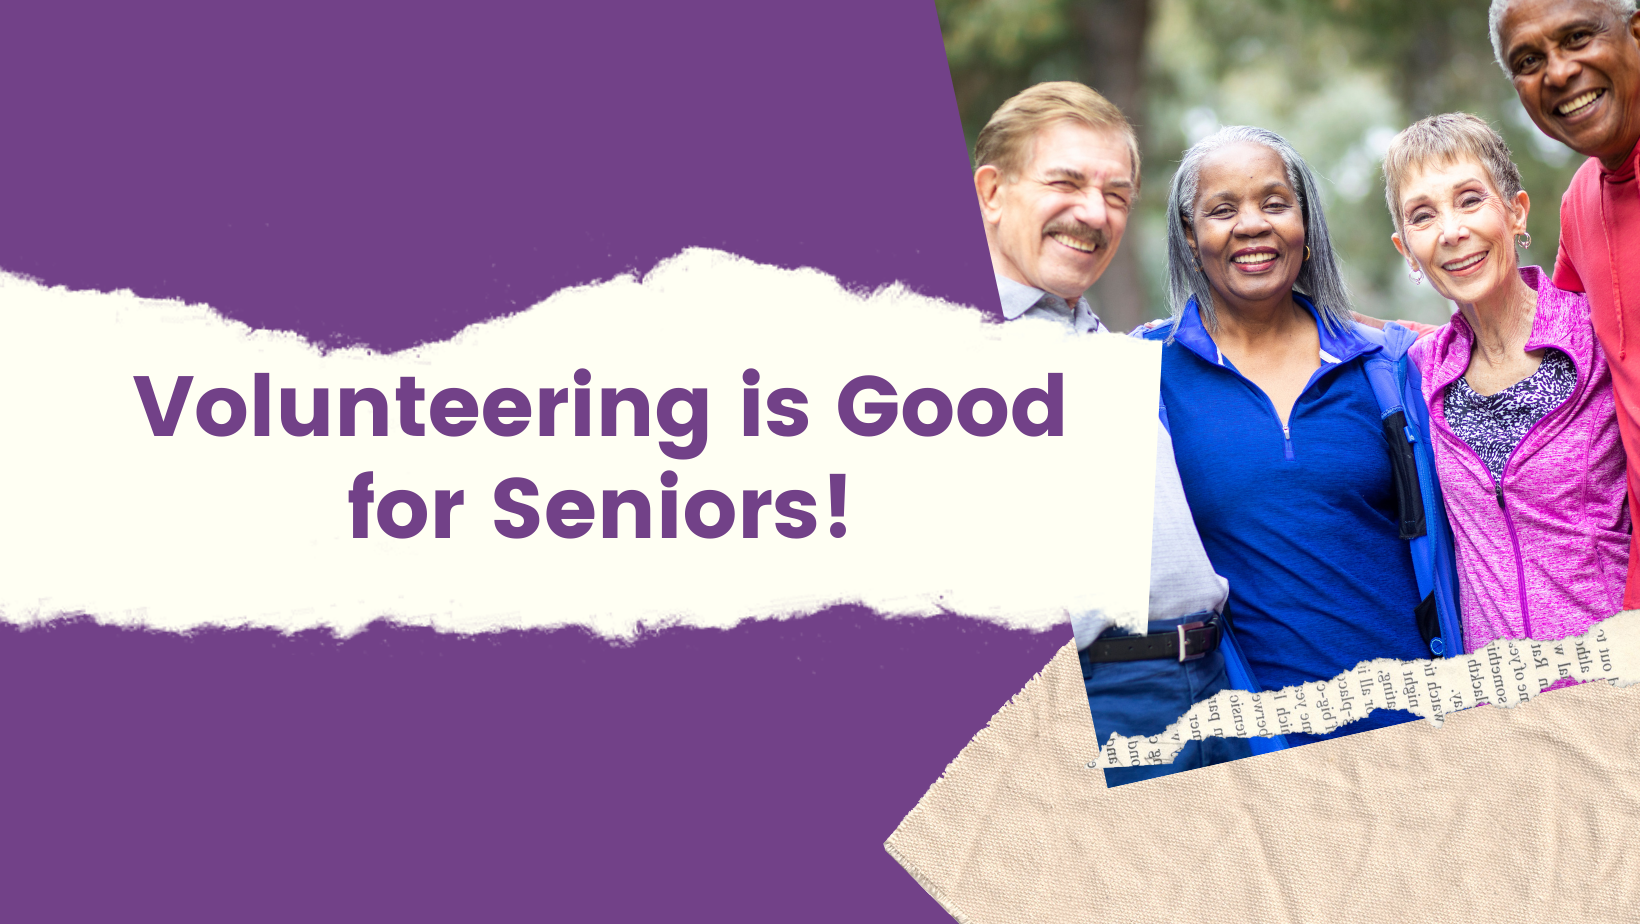 Volunteering for seniors